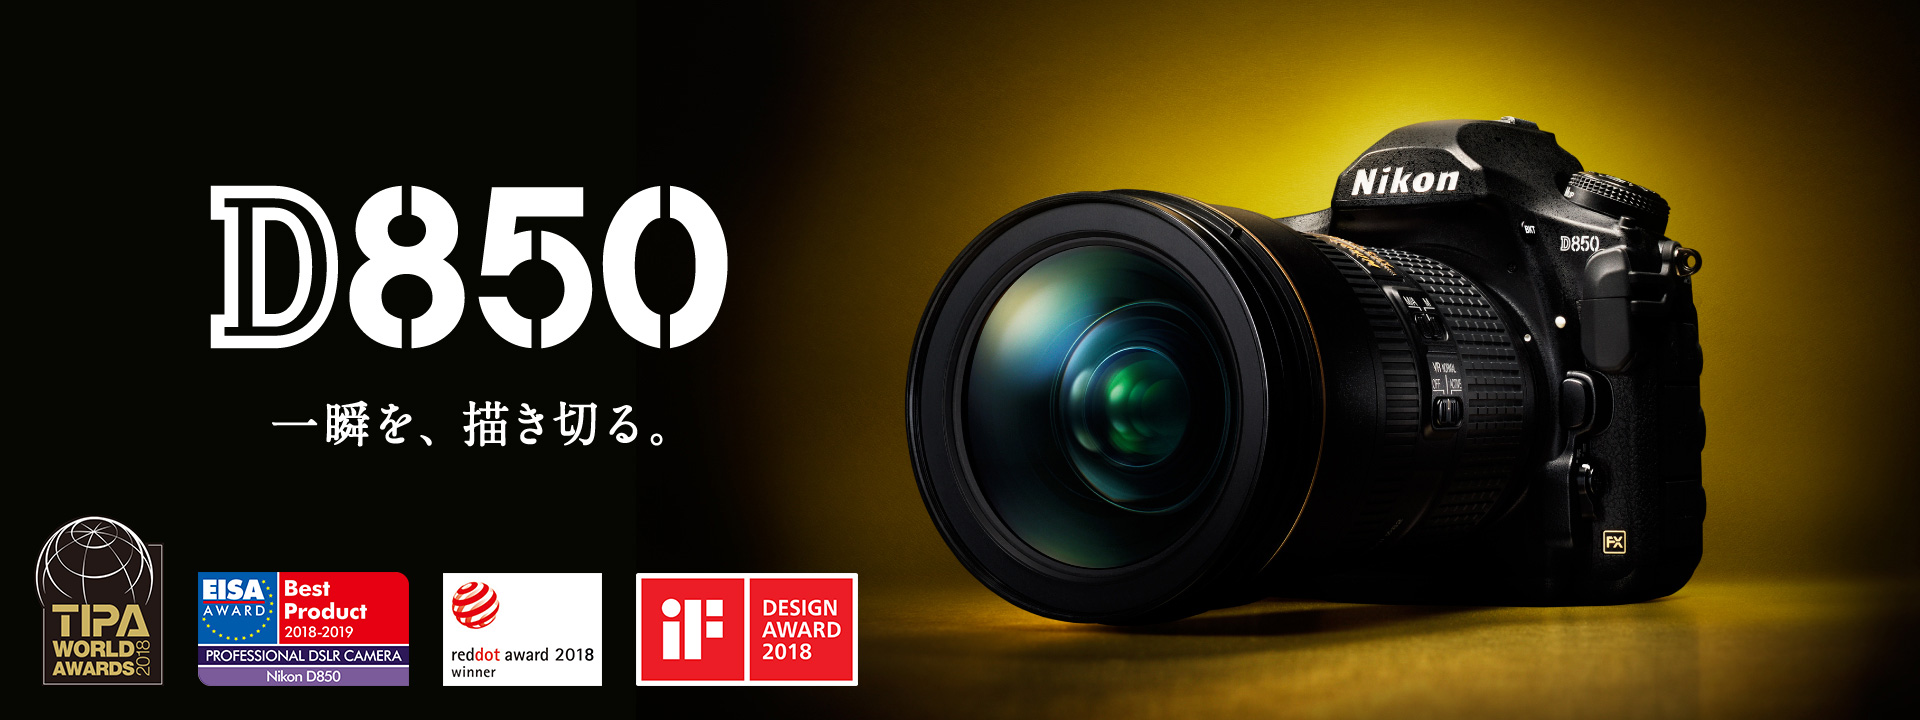 Nikon D850一眼レフカメラ(フルサイズ)